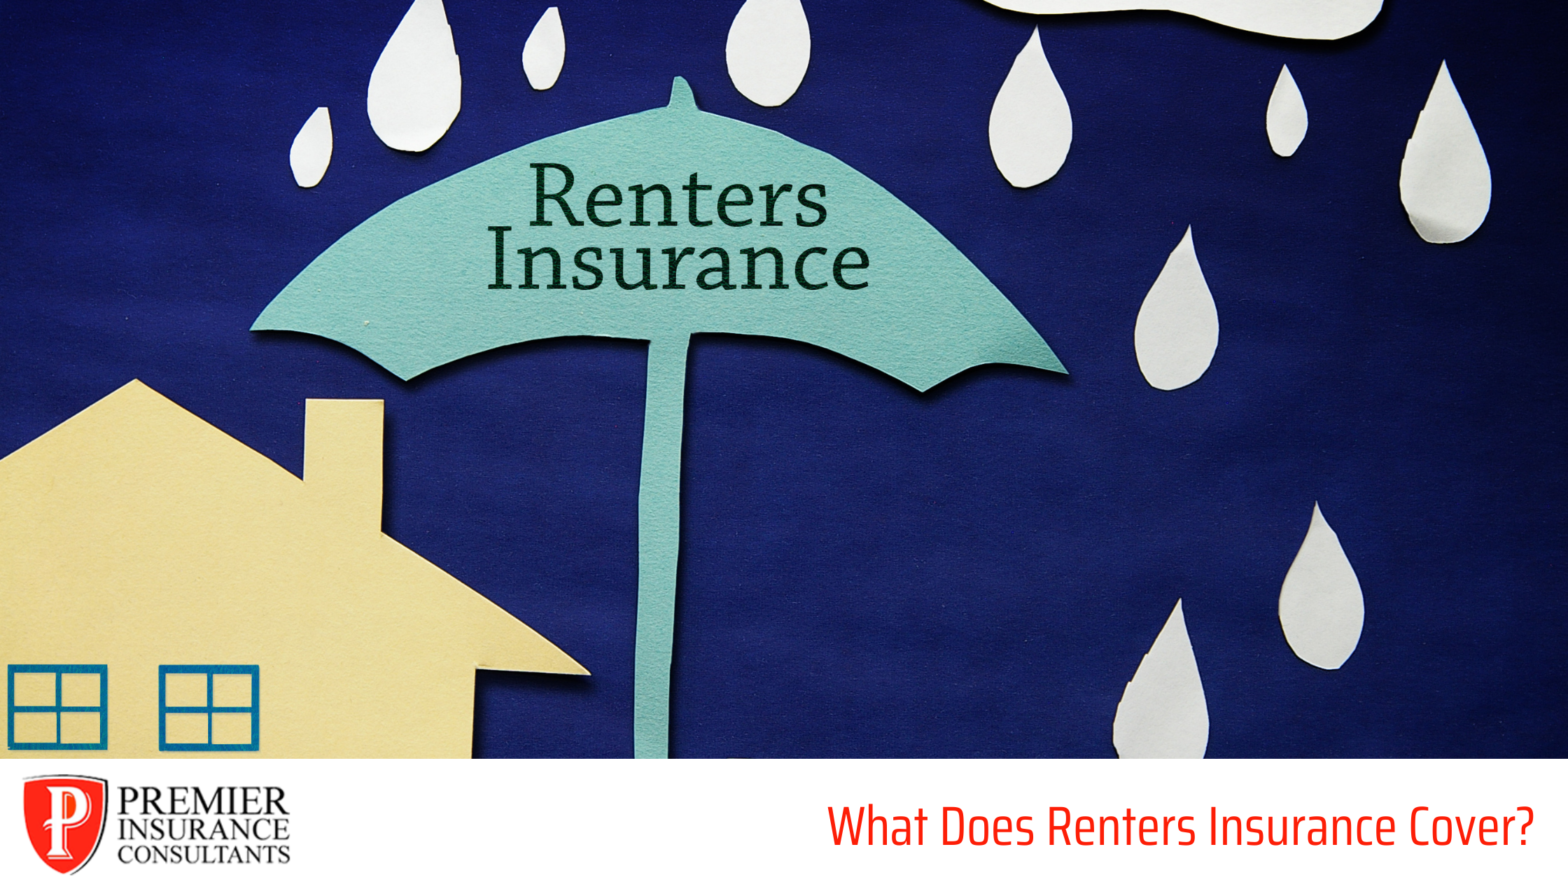 Renters Insurance